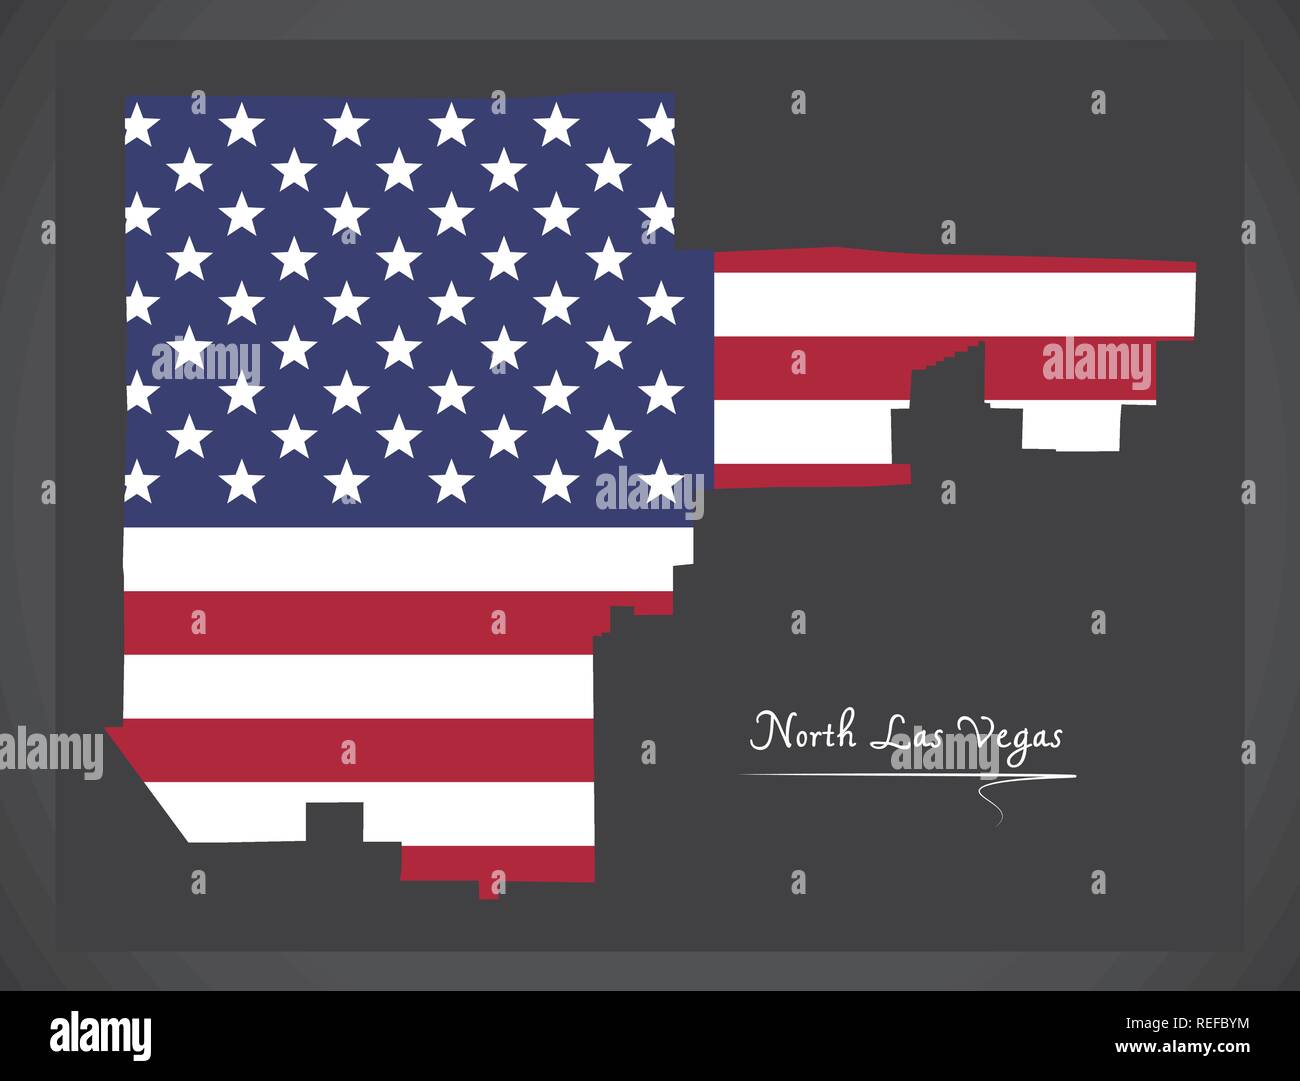 North Las Vegas Nevada City Karte mit Amerikanischen Nationalflagge Abbildung Stock Vektor